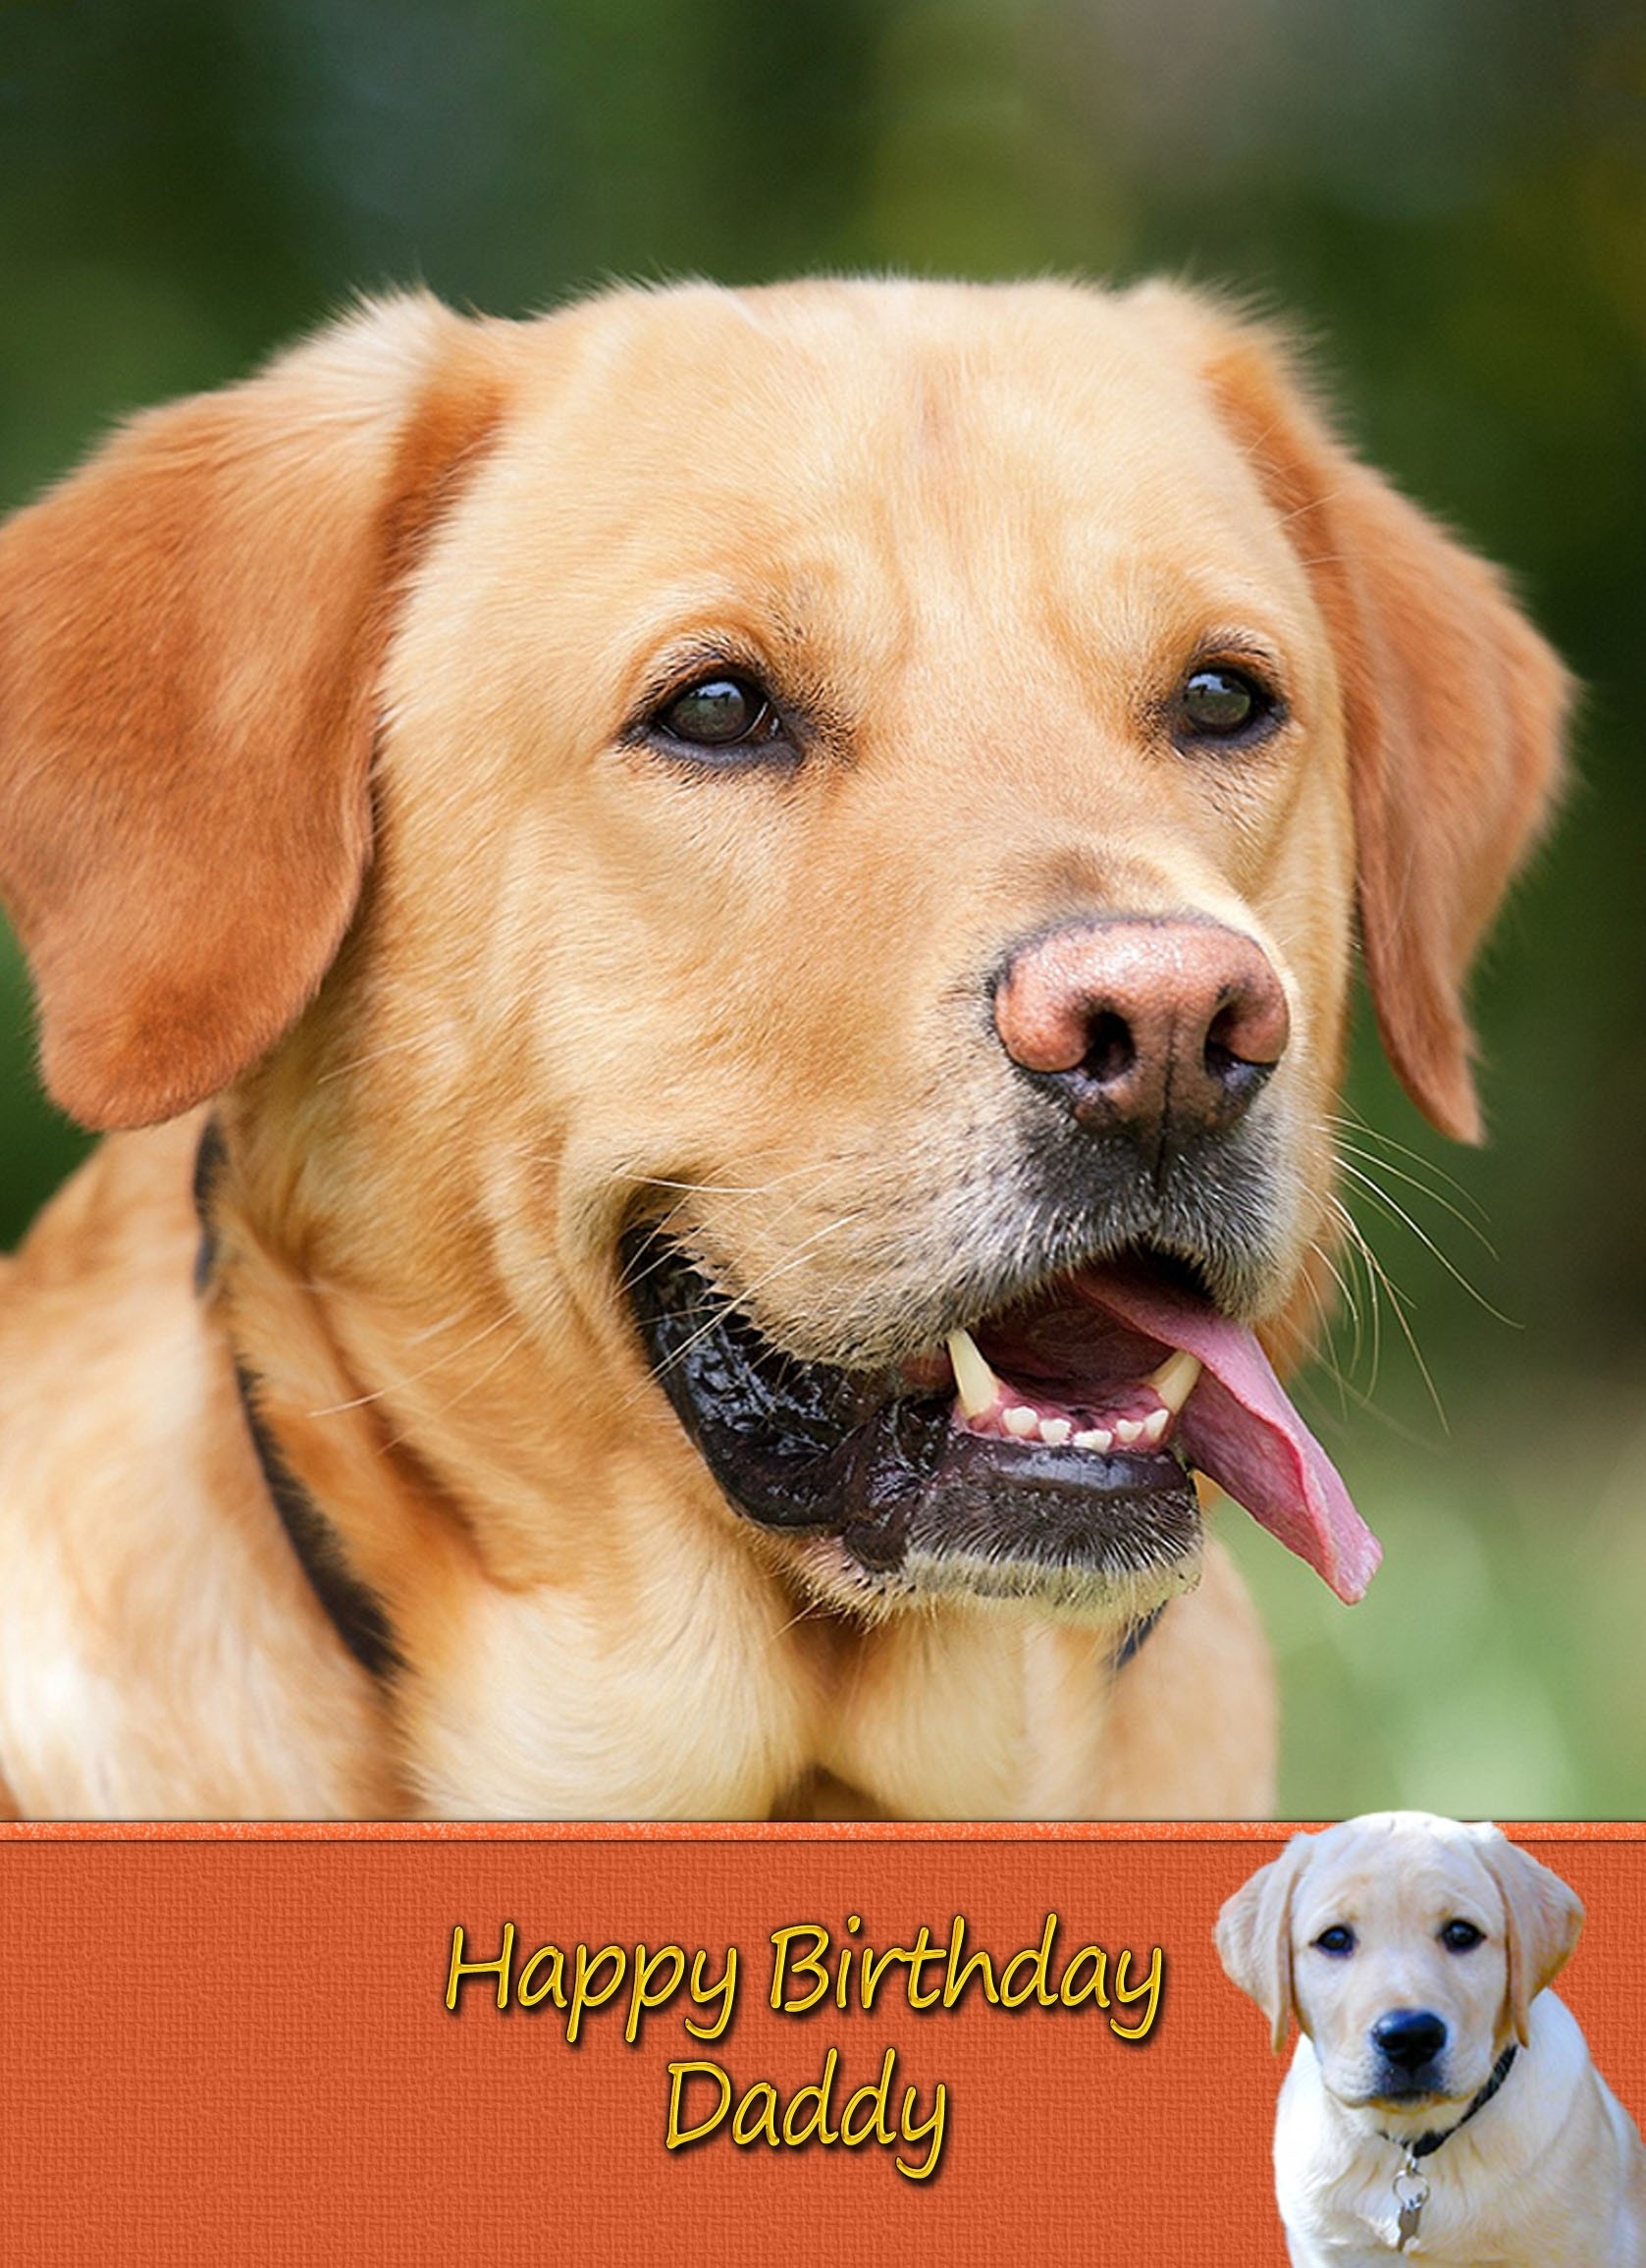 Personalised Golden Labrador Card